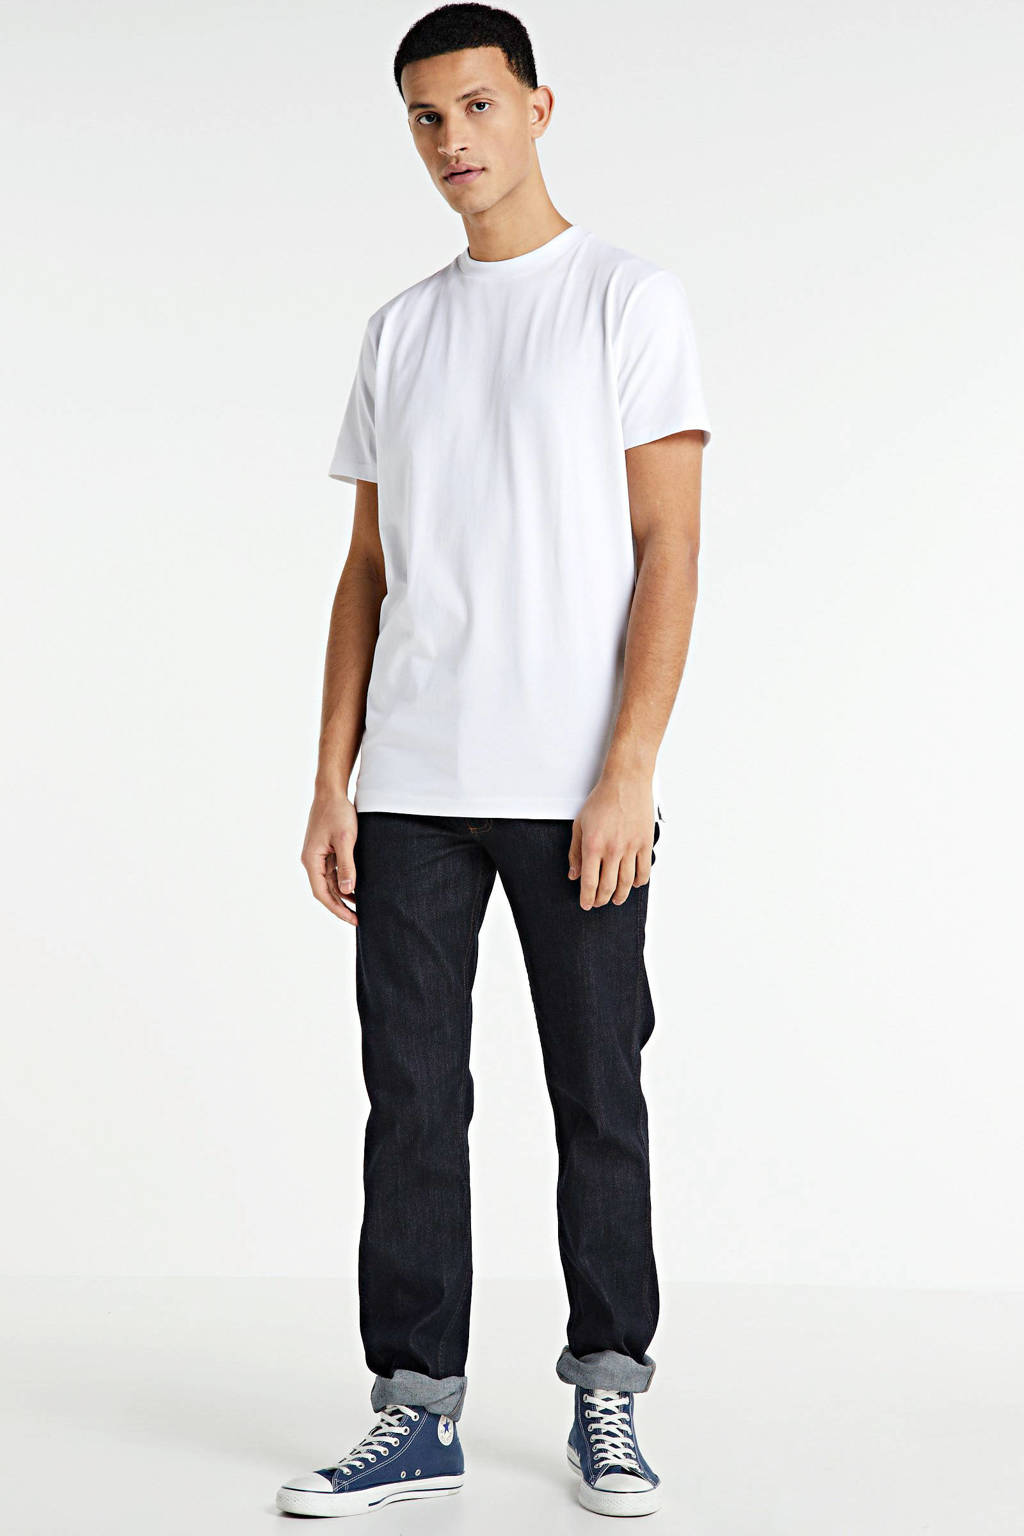 Purewhite T-shirt 10101 wit